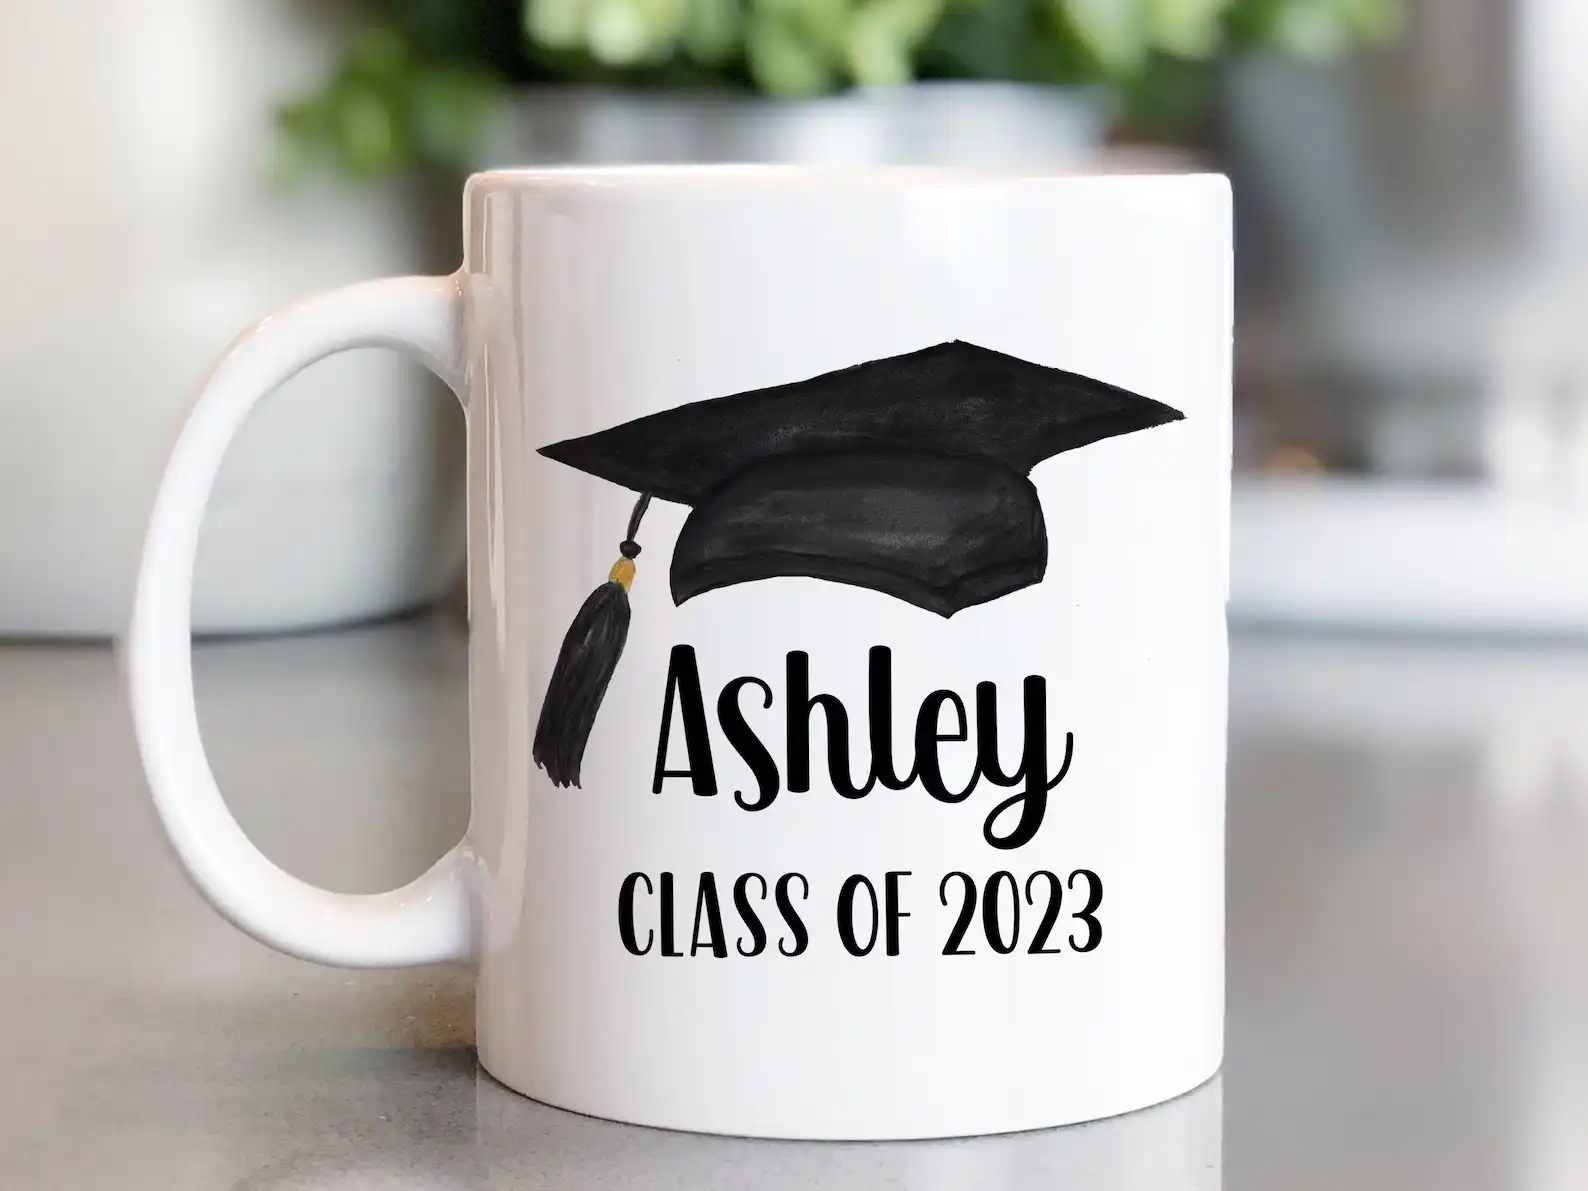 Personalized Graduation Mug